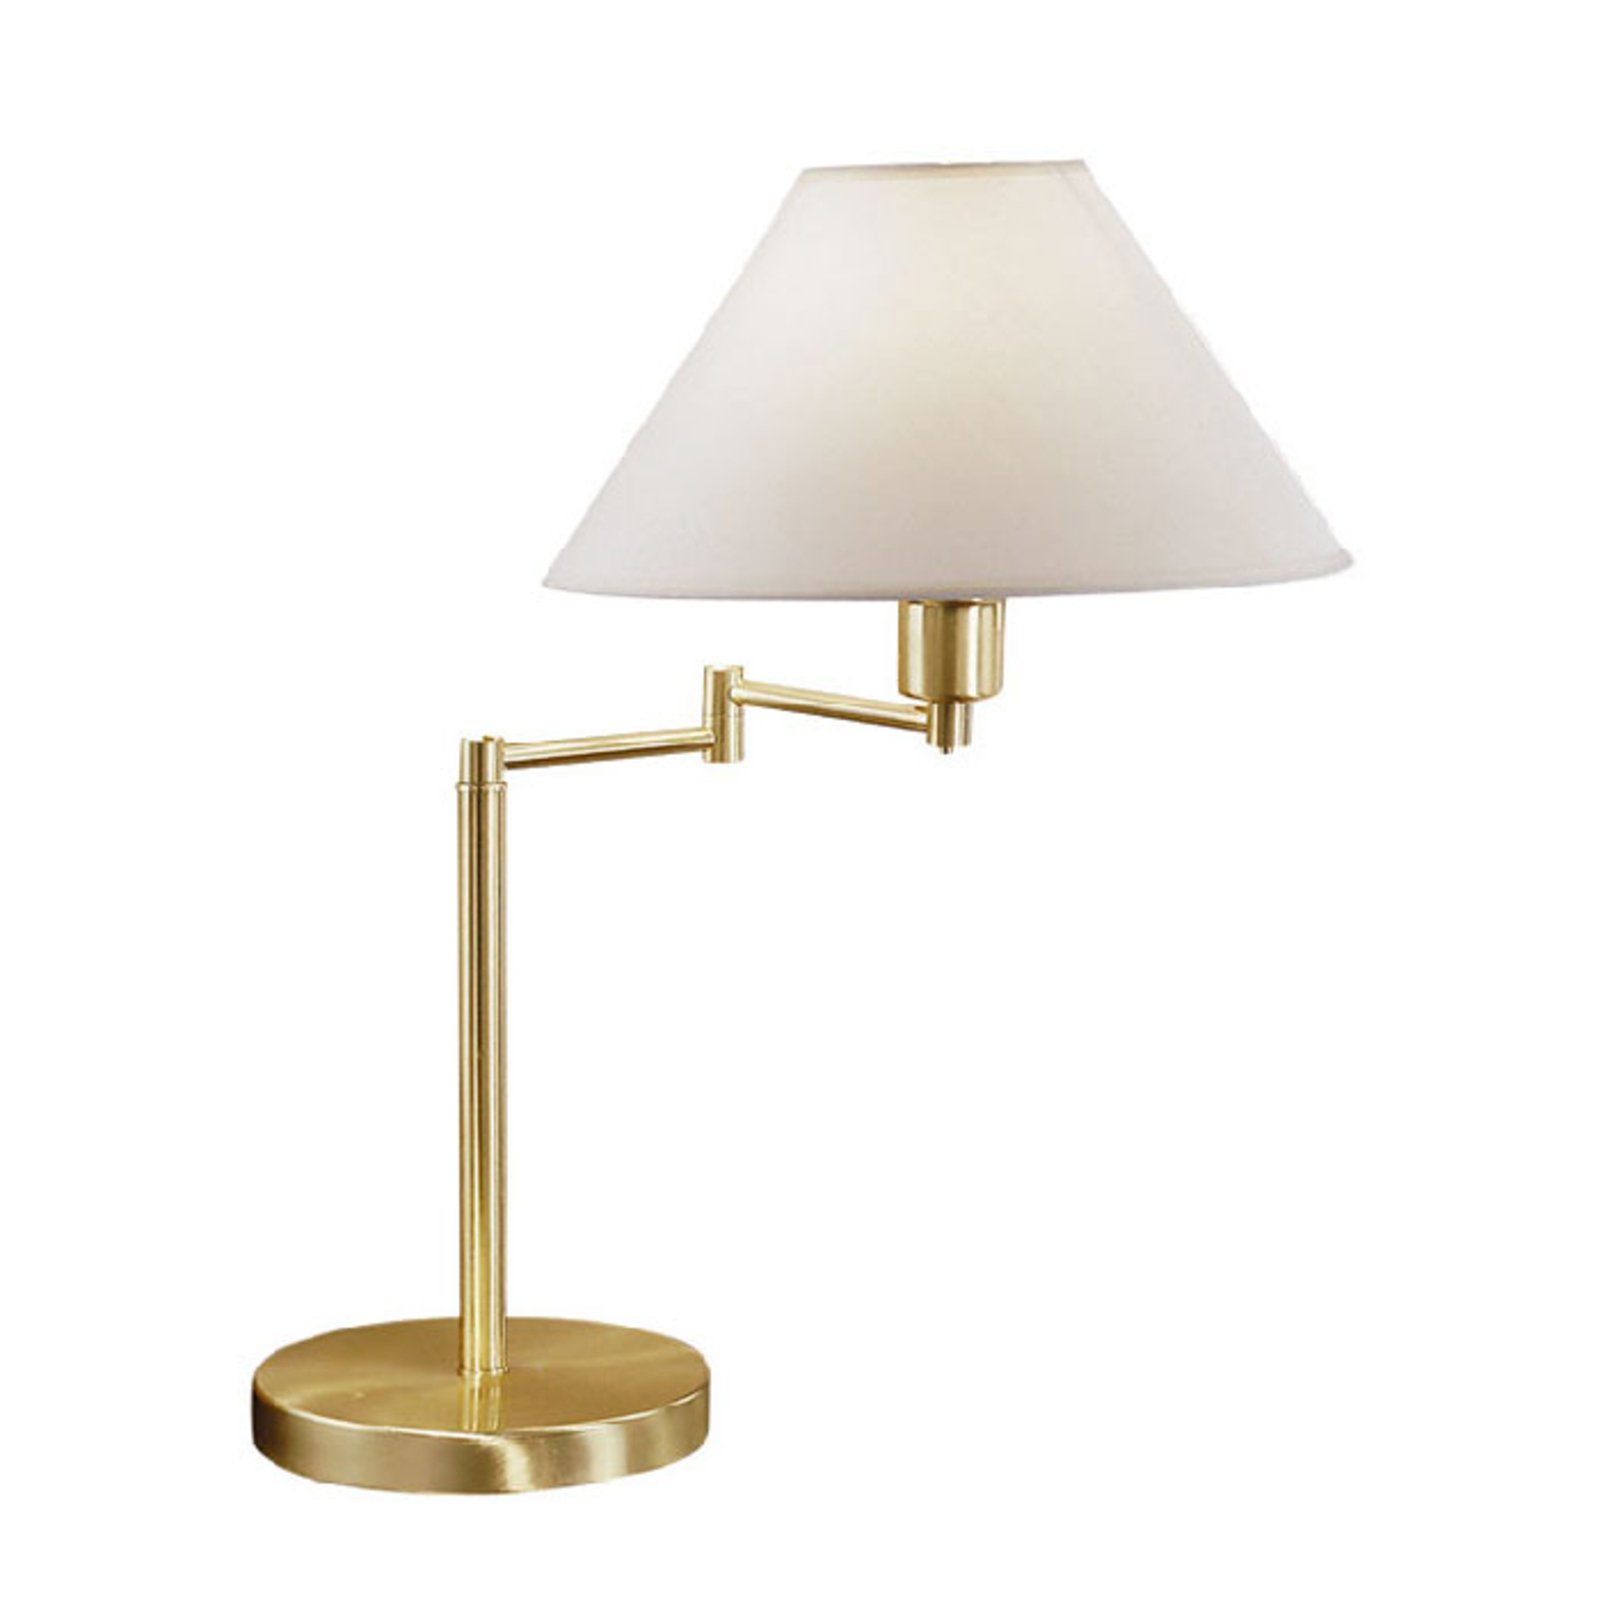 Hilton table lamp, pivotable, brass